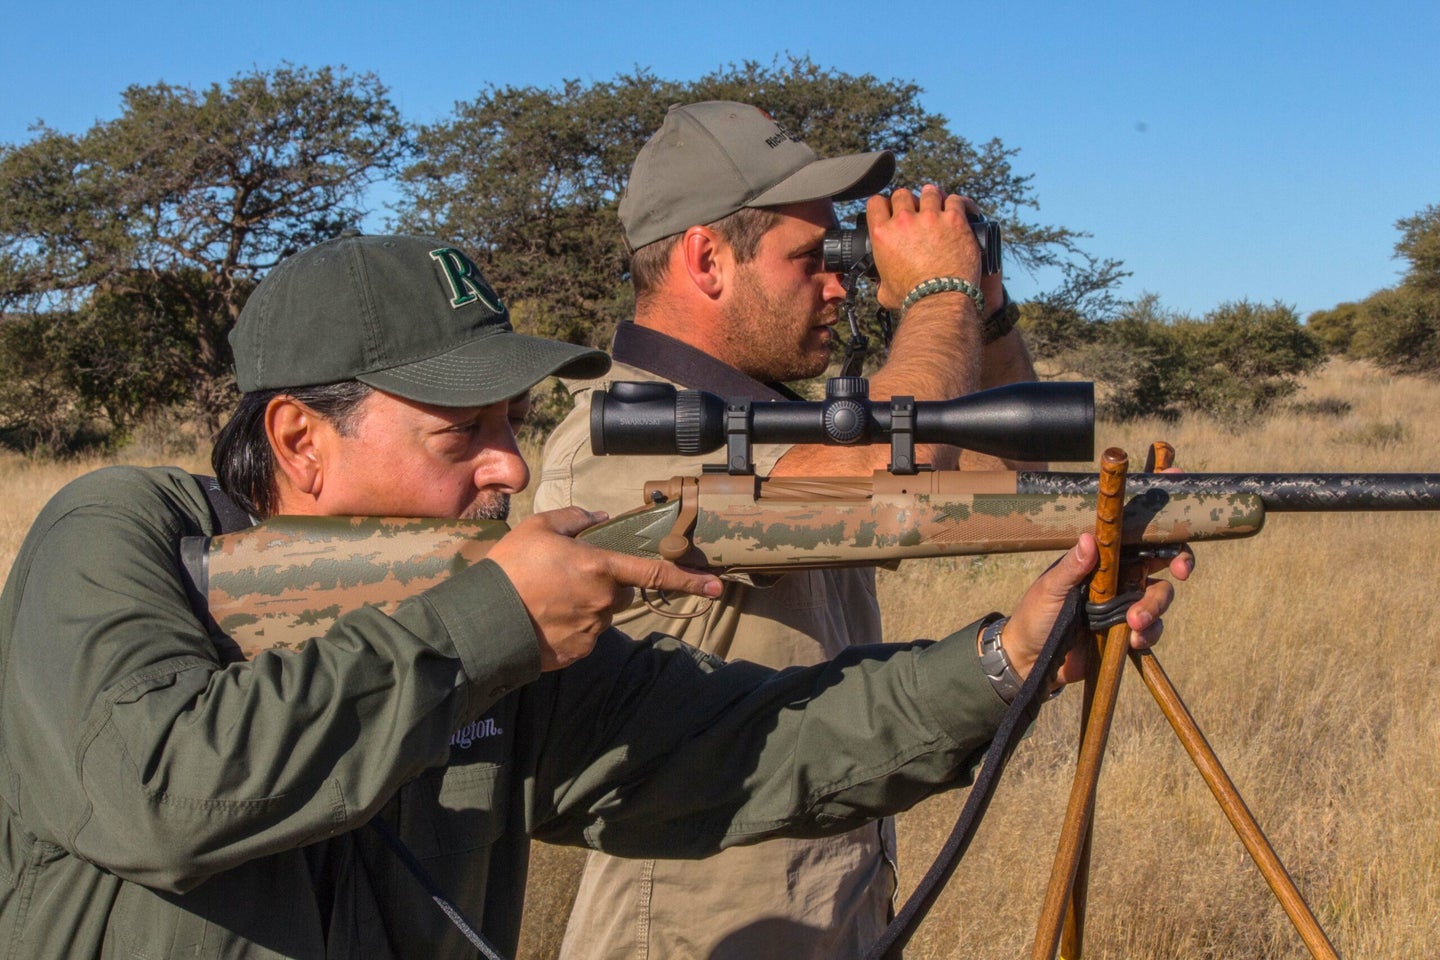 Hunters with riflescope